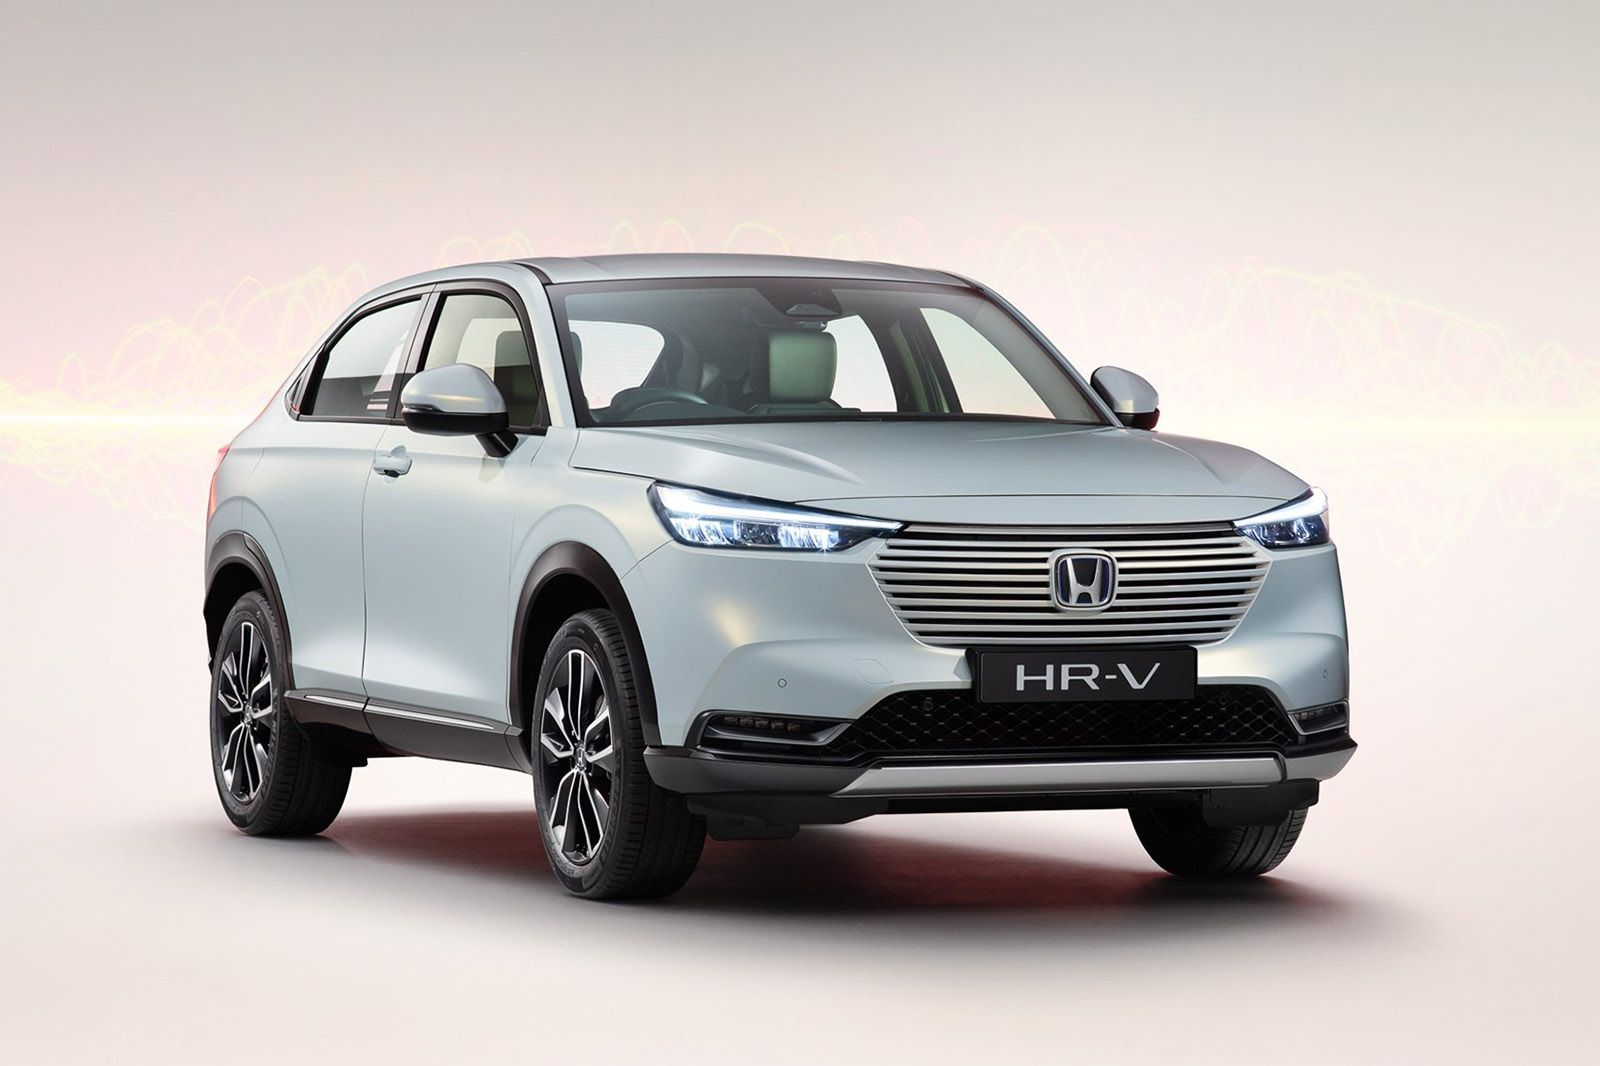 Honda HR-V e:HEV pictures: Check out 2022's hybrid crossover